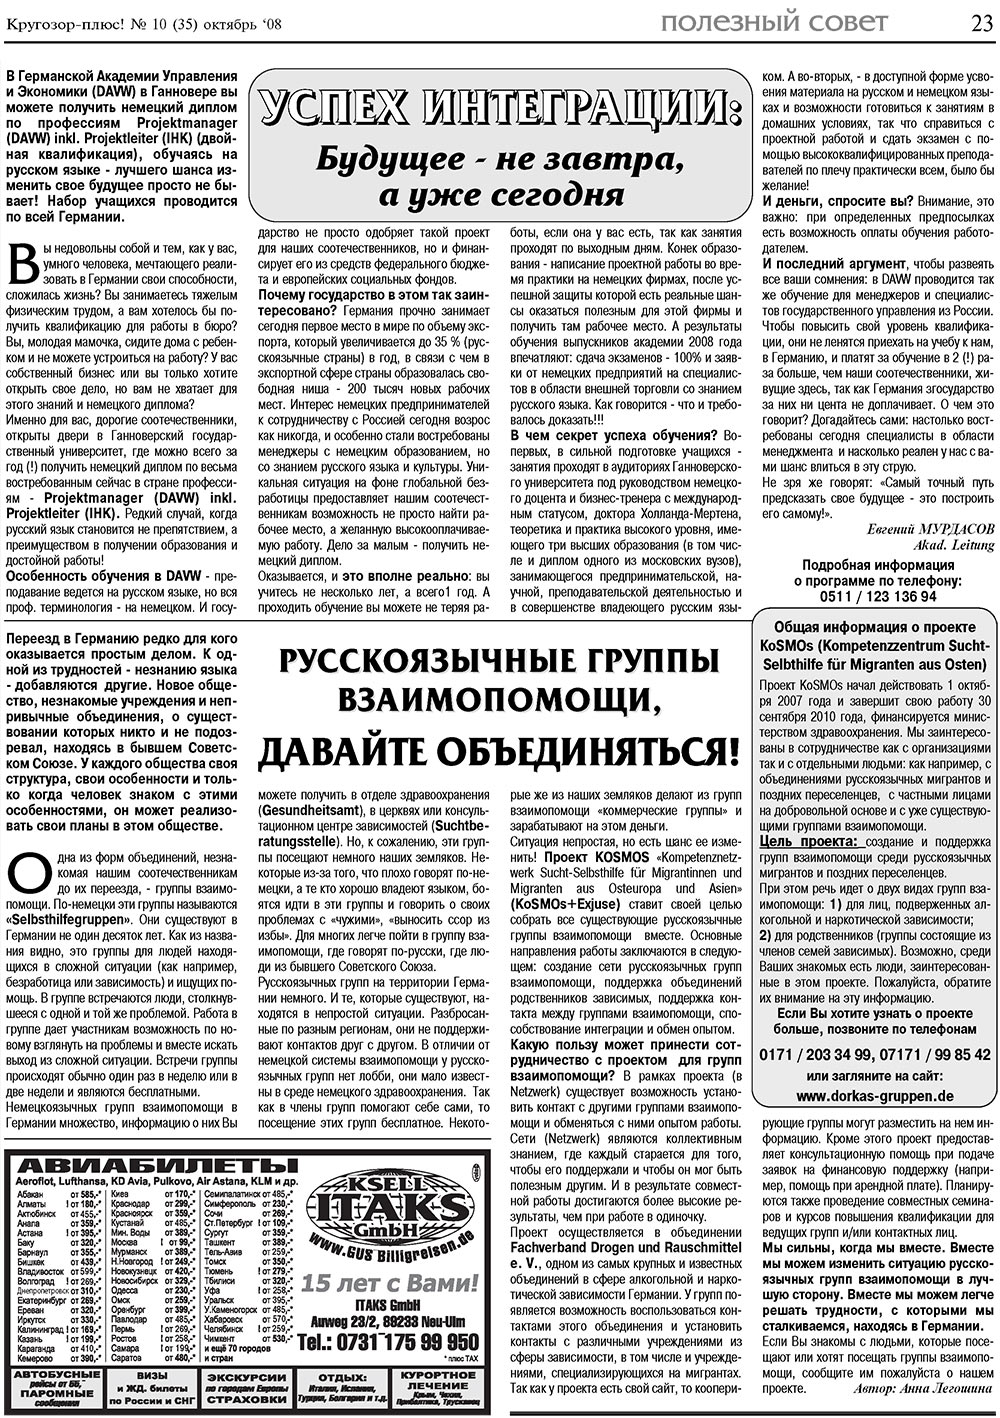 Кругозор плюс! (газета). 2008 год, номер 10, стр. 23